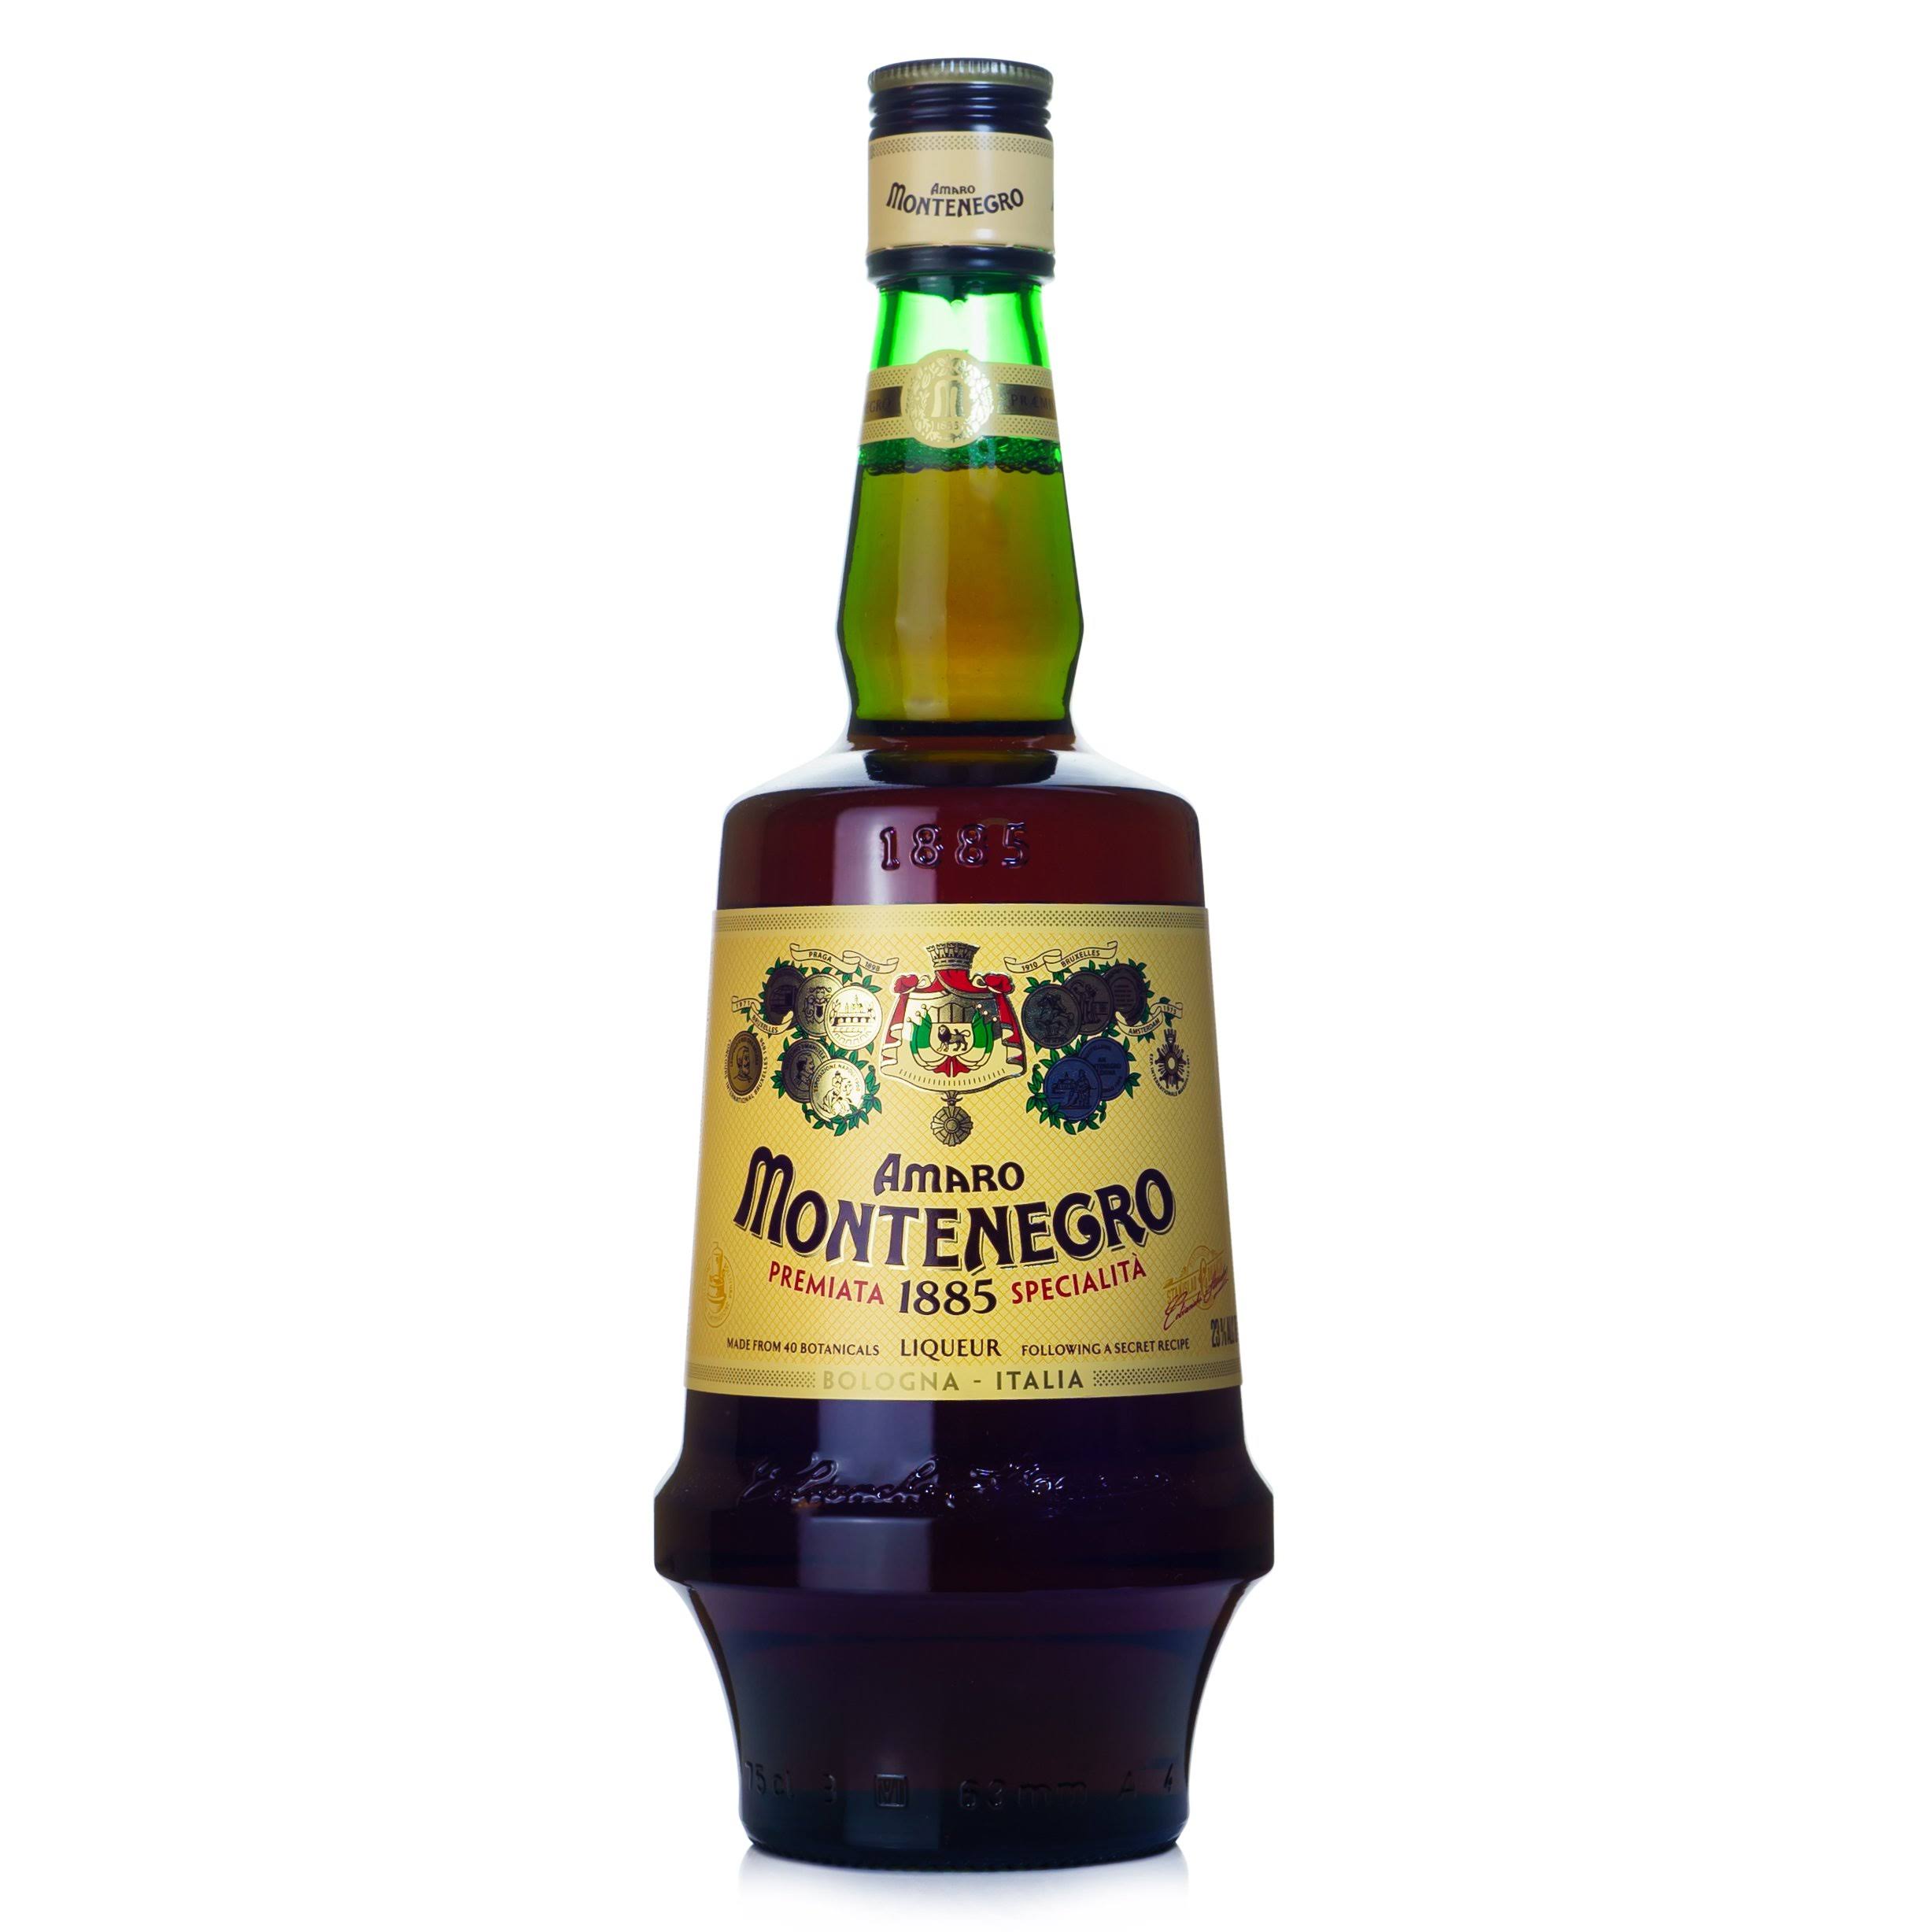 Montenegro Amaro Liqueur - 750 ml bottle